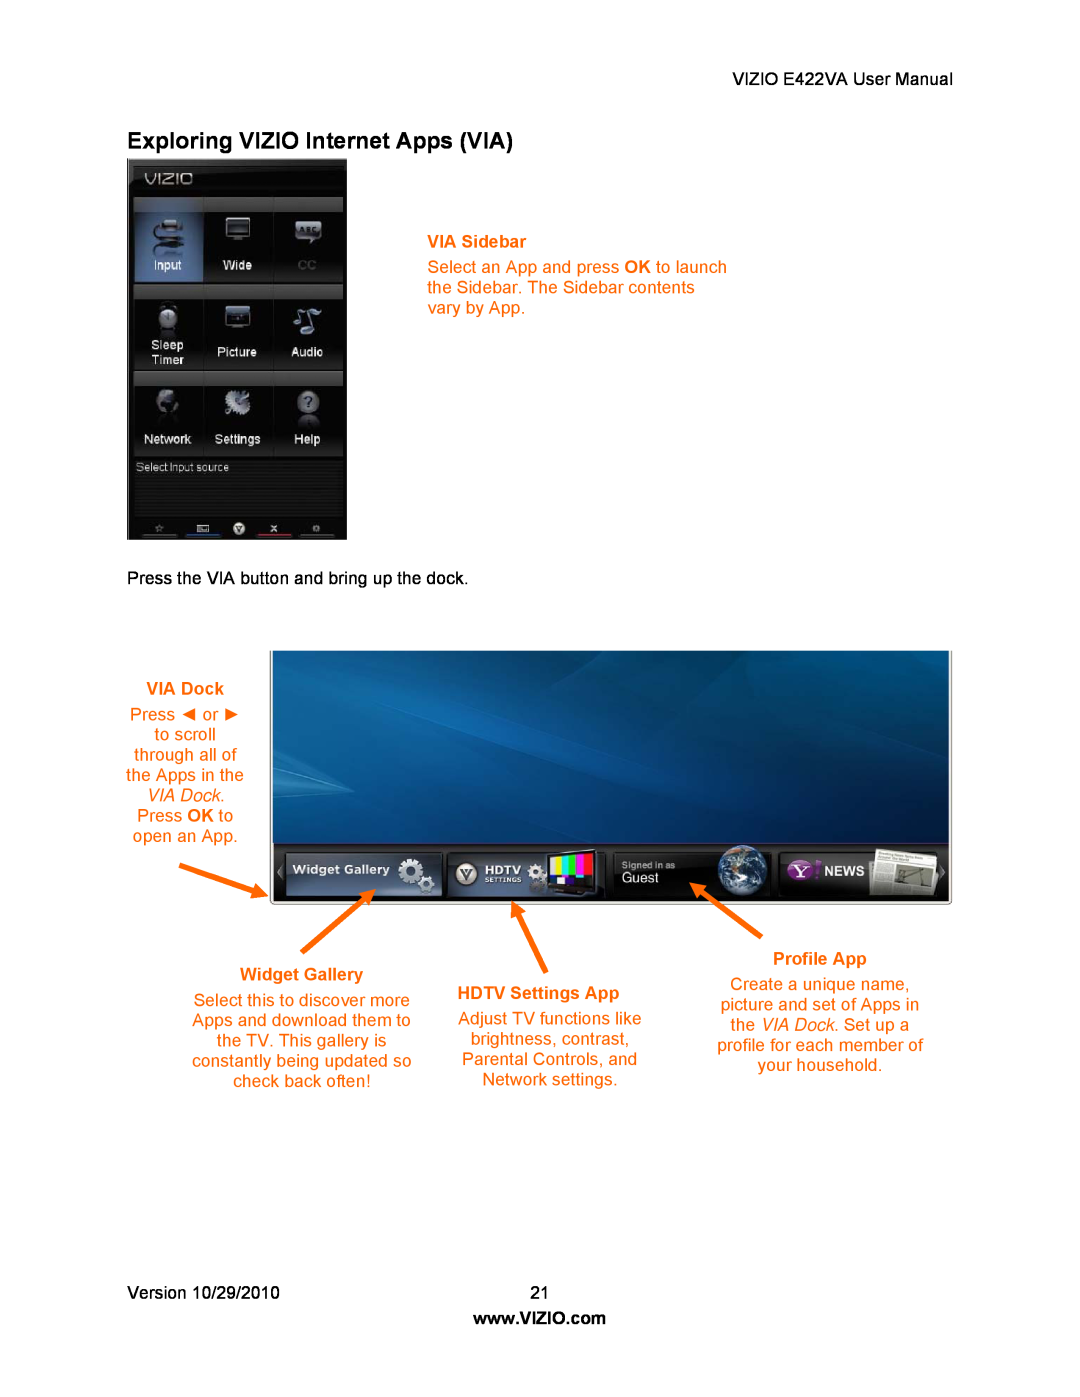 Xerox E422VA user manual Exploring VIZIO Internet Apps VIA, VIA Sidebar, VIA Dock, Profile App, HDTV Settings App 